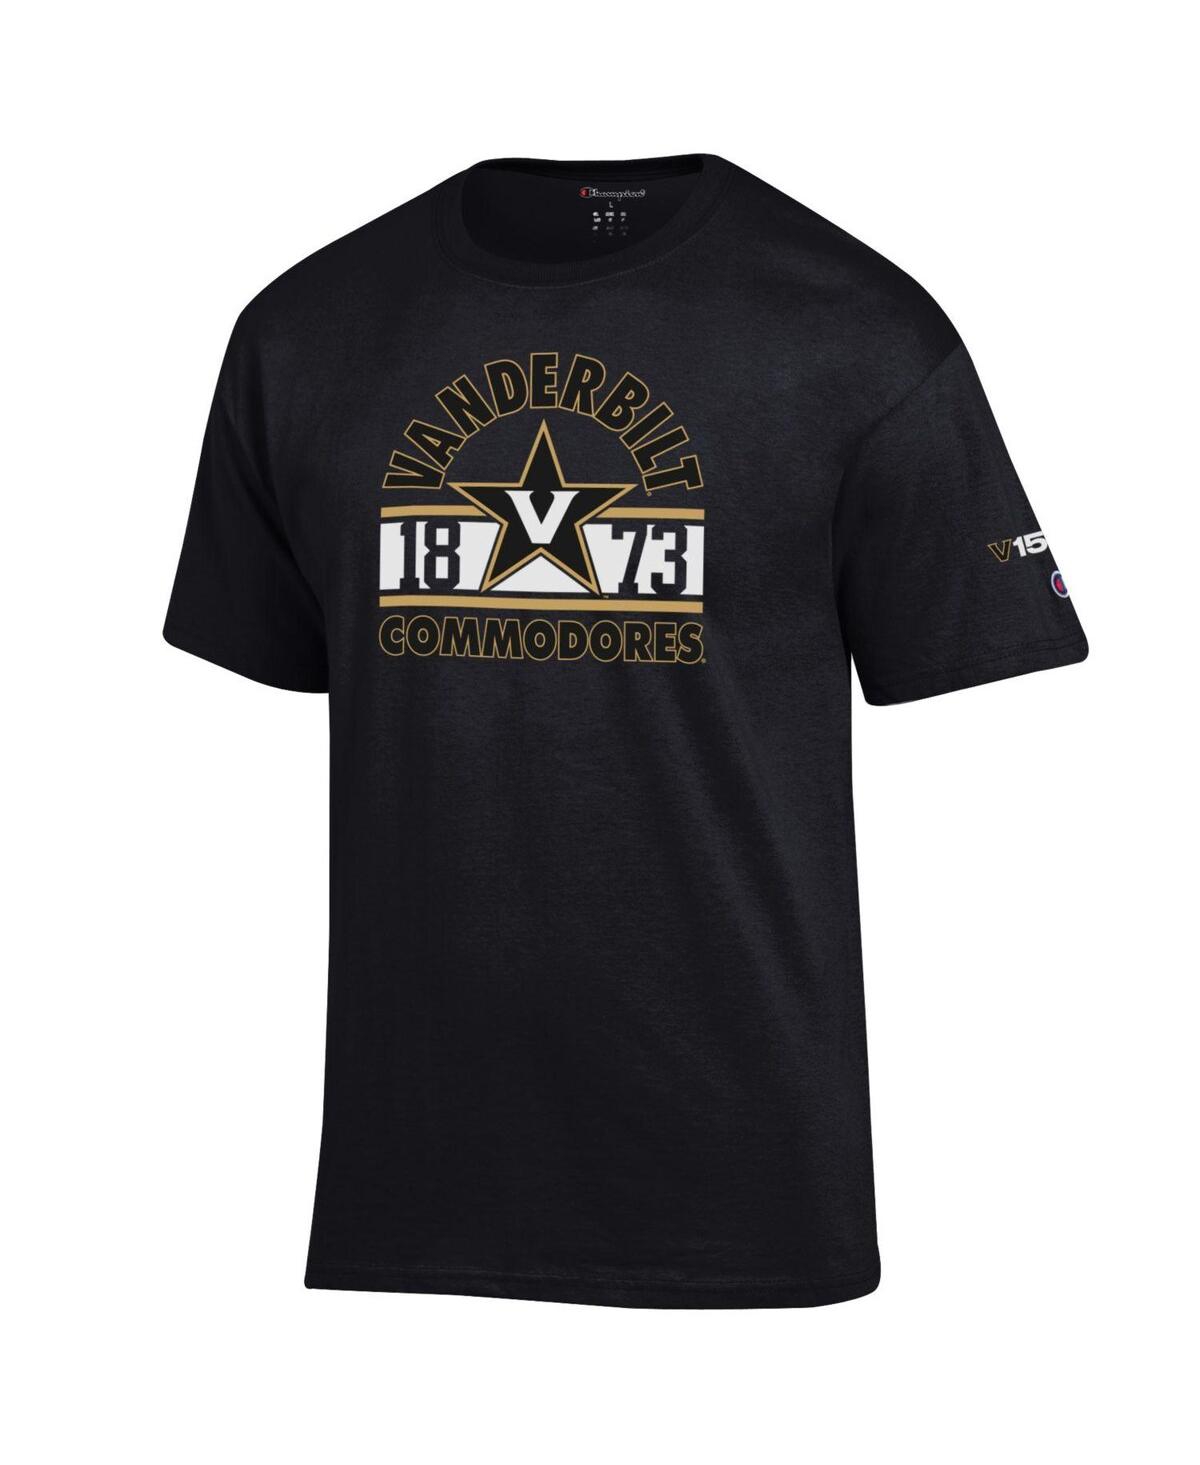 Champion Black Vanderbilt Commodores 150th Anniversary 1873 Jersey